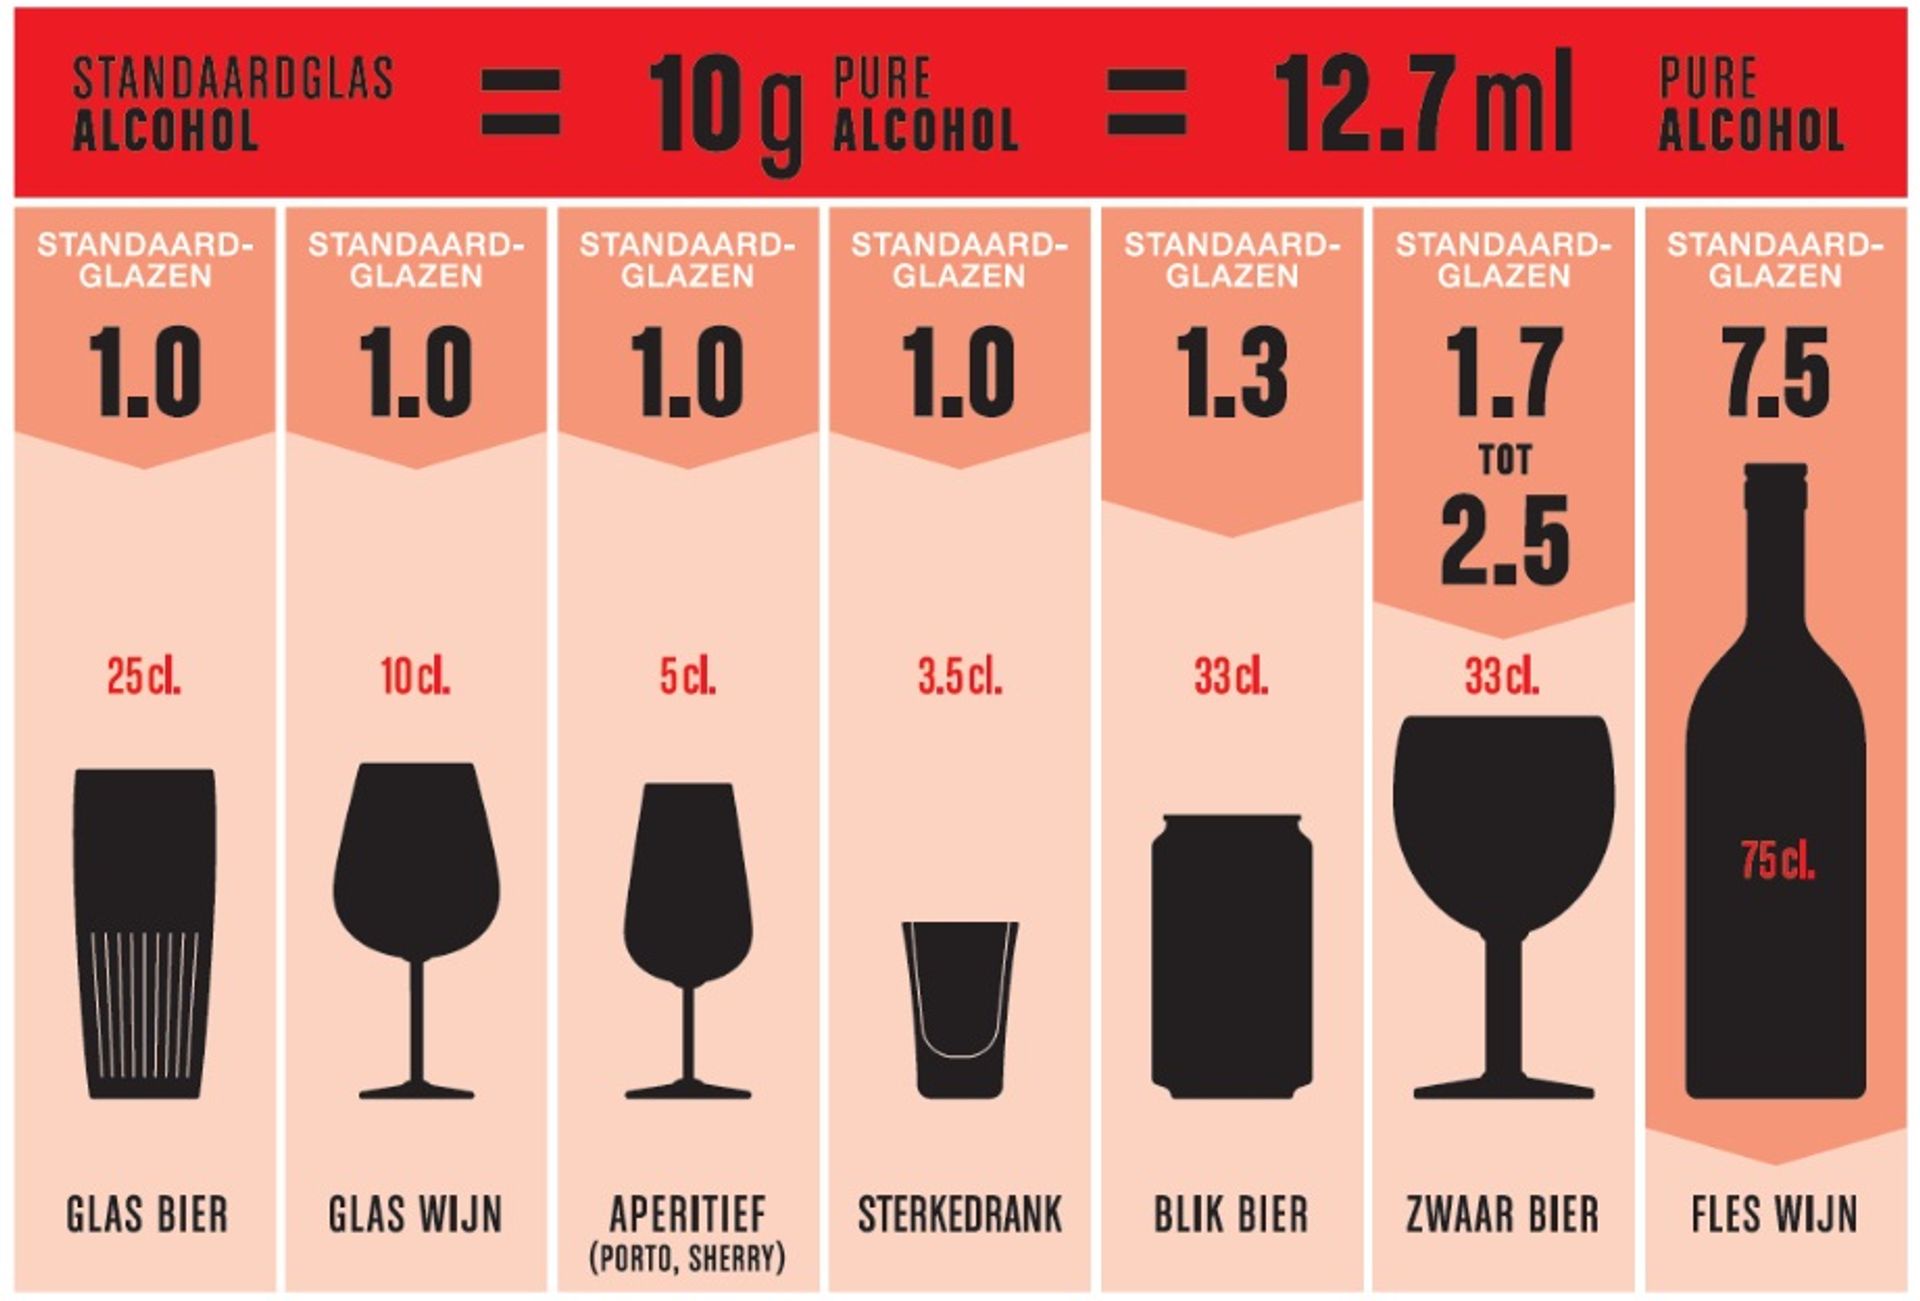 Bron: VAD vzw (Vlaams Expertisecentrum voor Alcohol en Andere Drugs), brochure